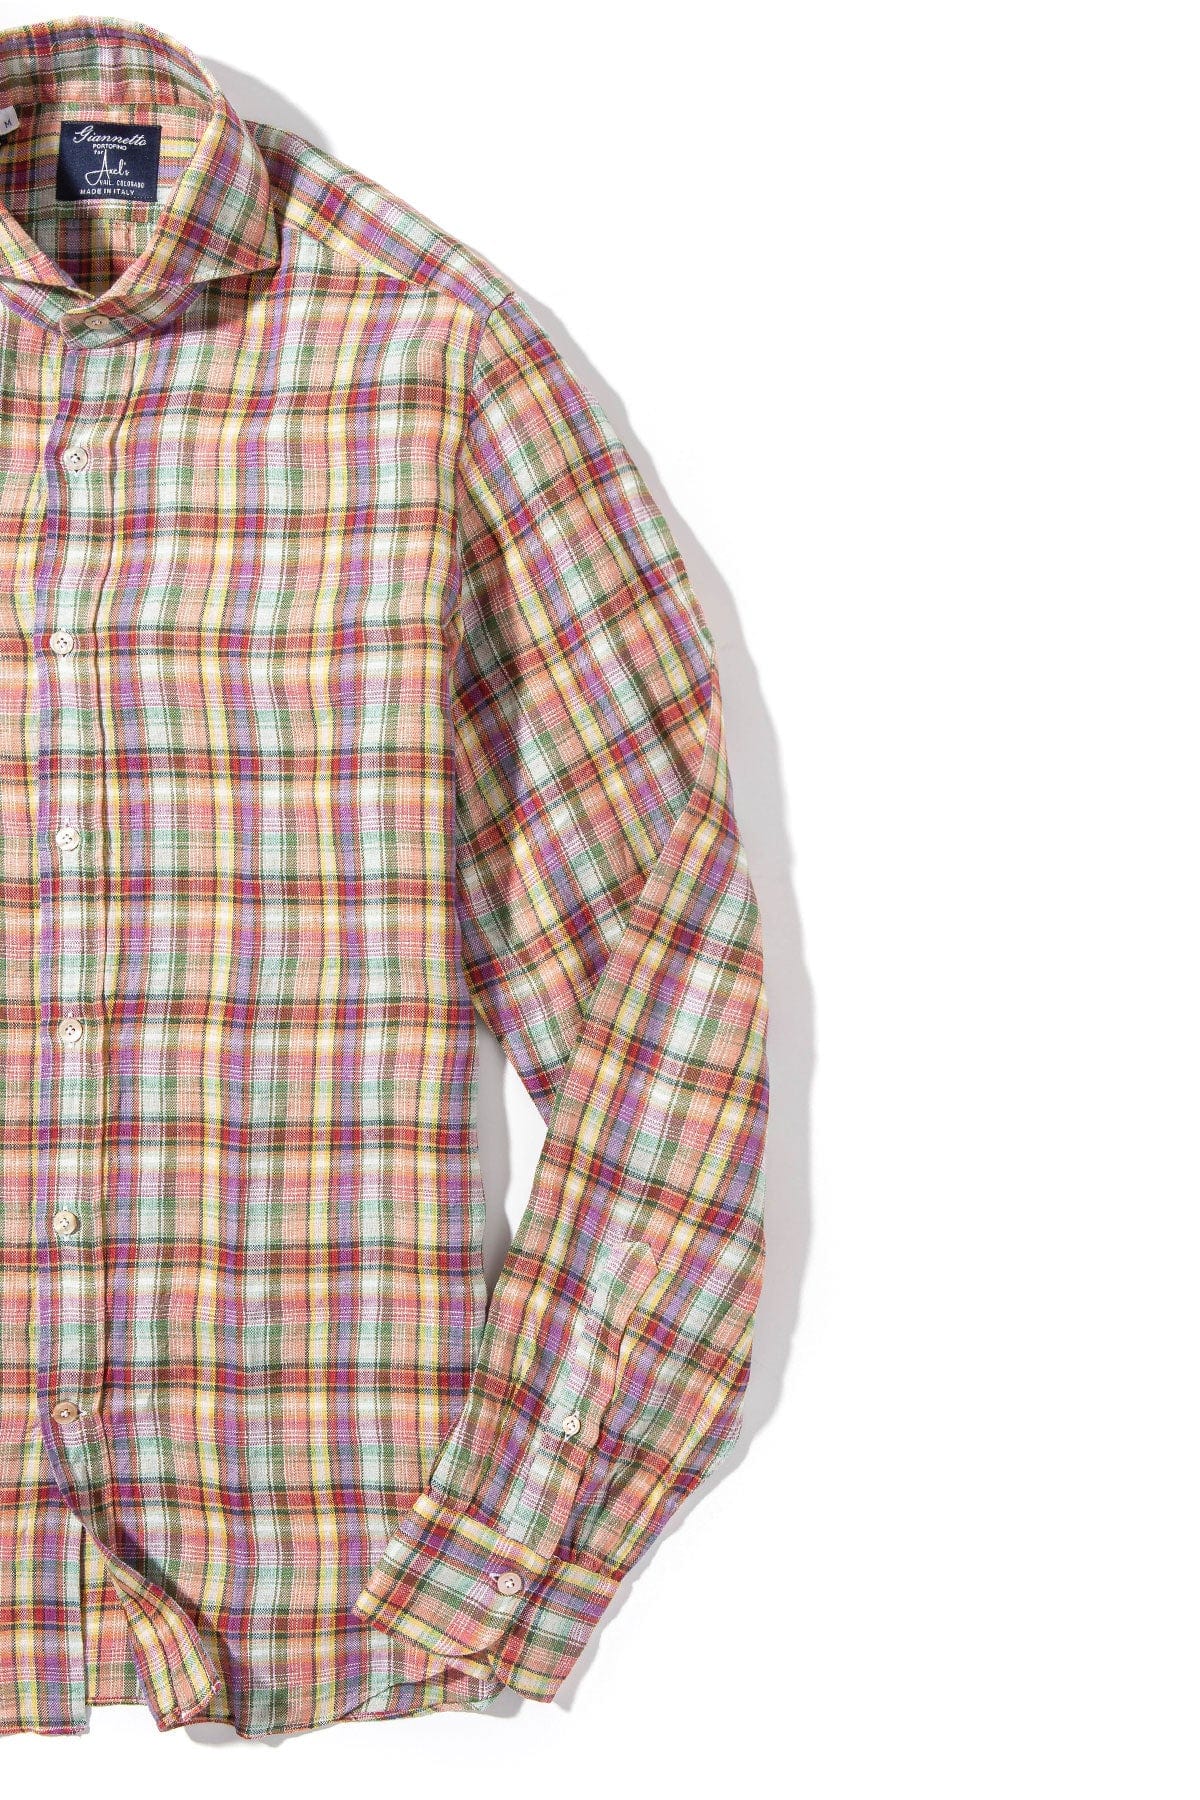 Yeti Checkered Shirt in Multi Red Combo - AXEL'S